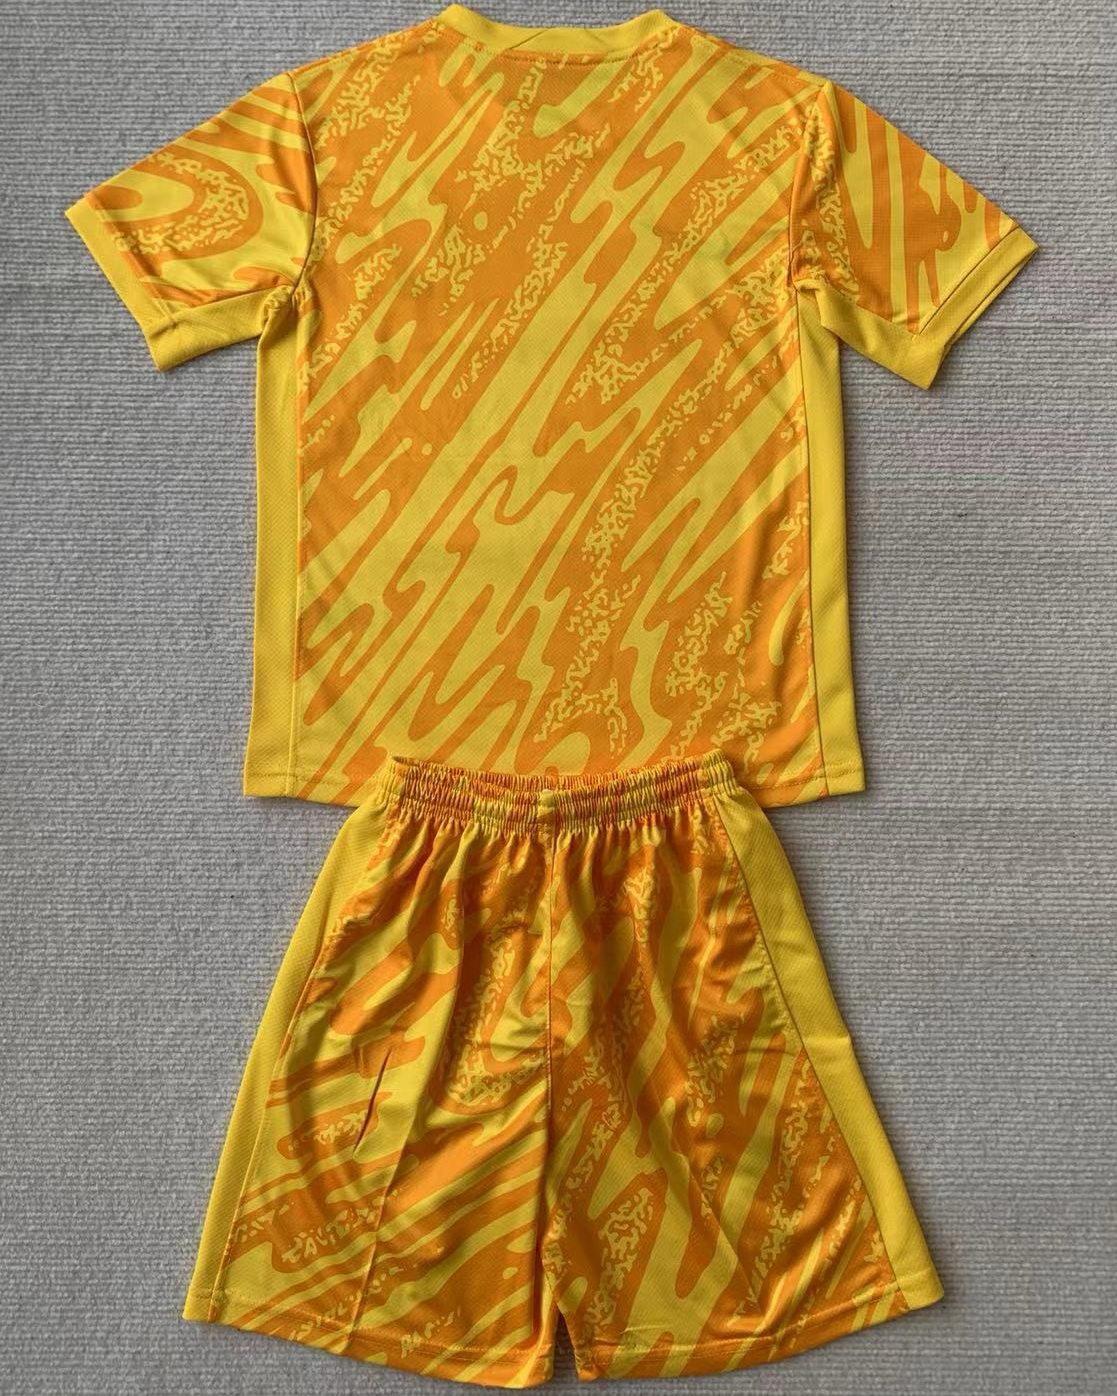 Kid Portugal 2024 European Cup Goalkeeper Yellow Jersey Kit